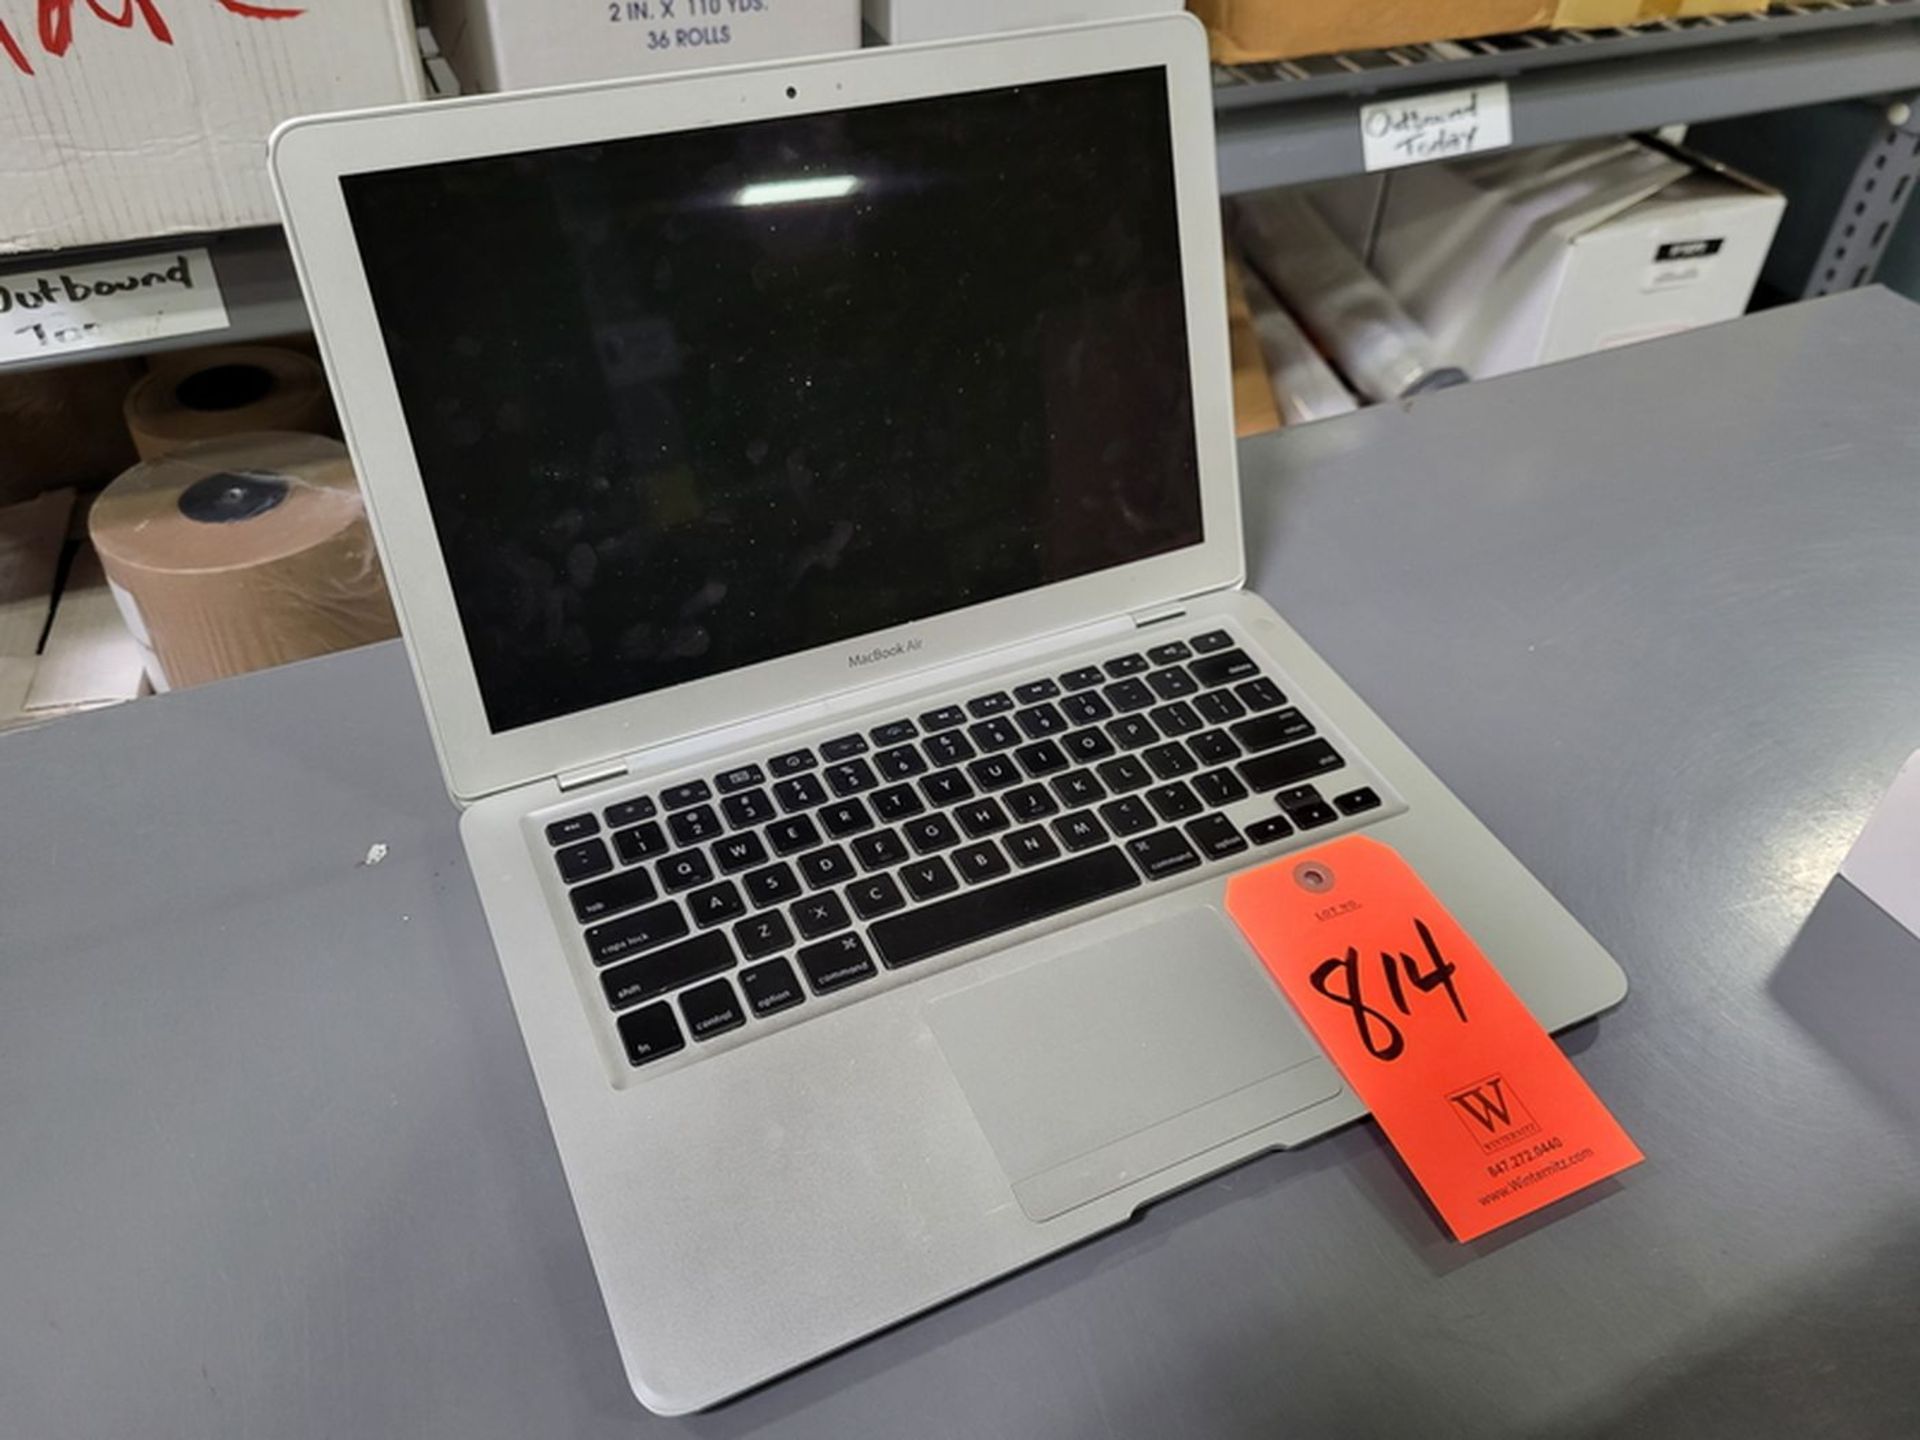 MacBook Pro Notebook Computer; 13 in. Screen (Missing AC Power Adapter)